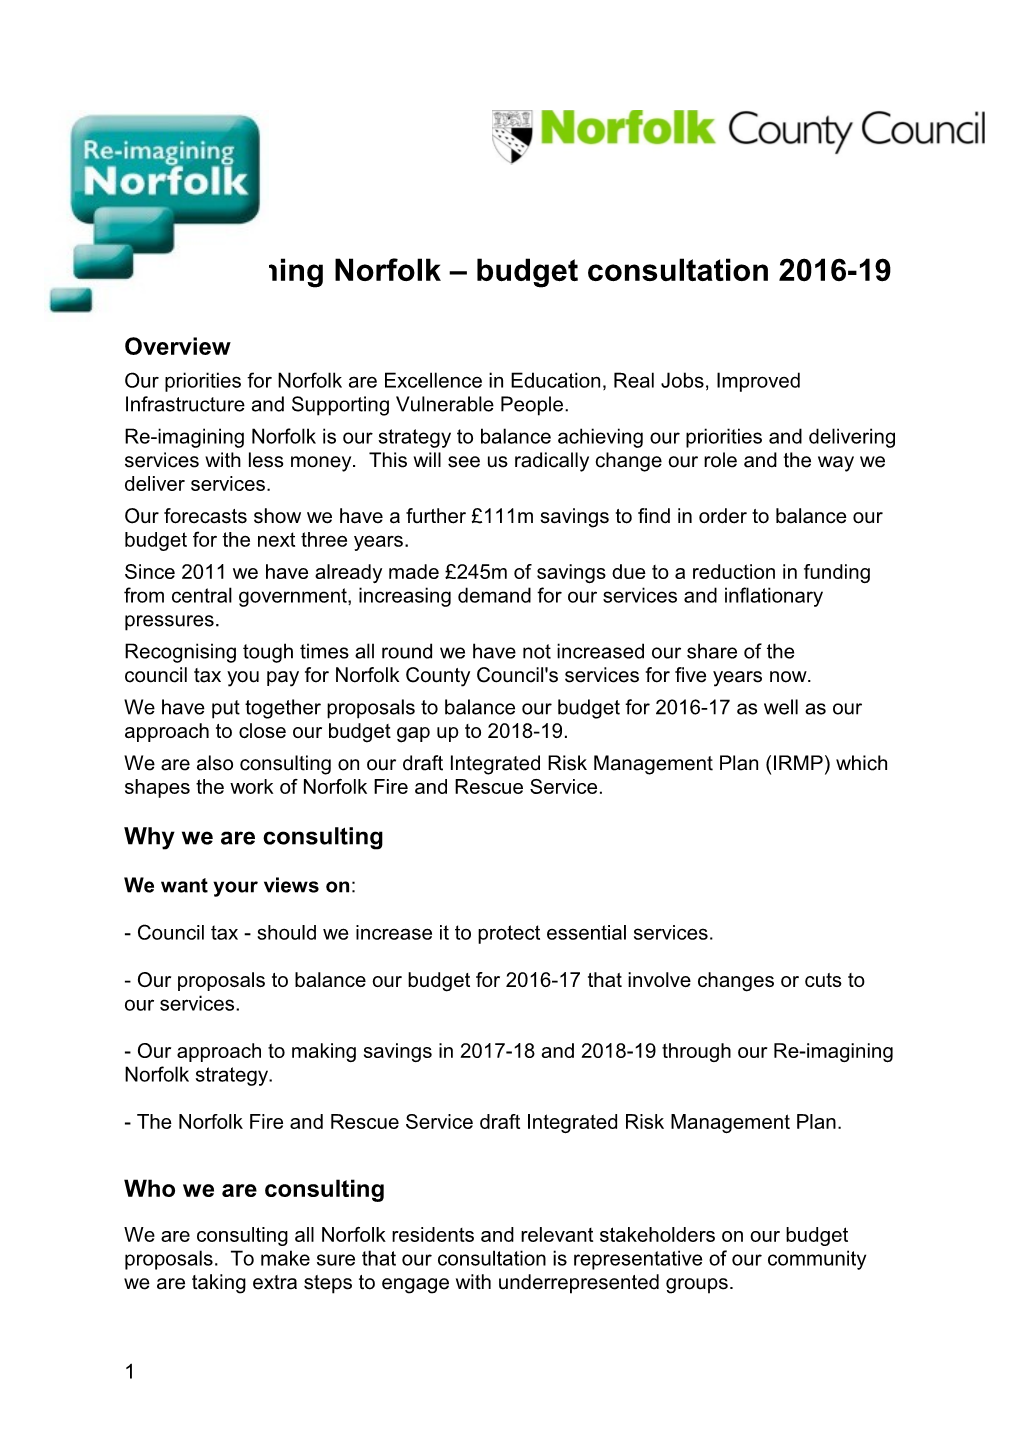 Re-Imagining Norfolk Budget Consultation 2016-19